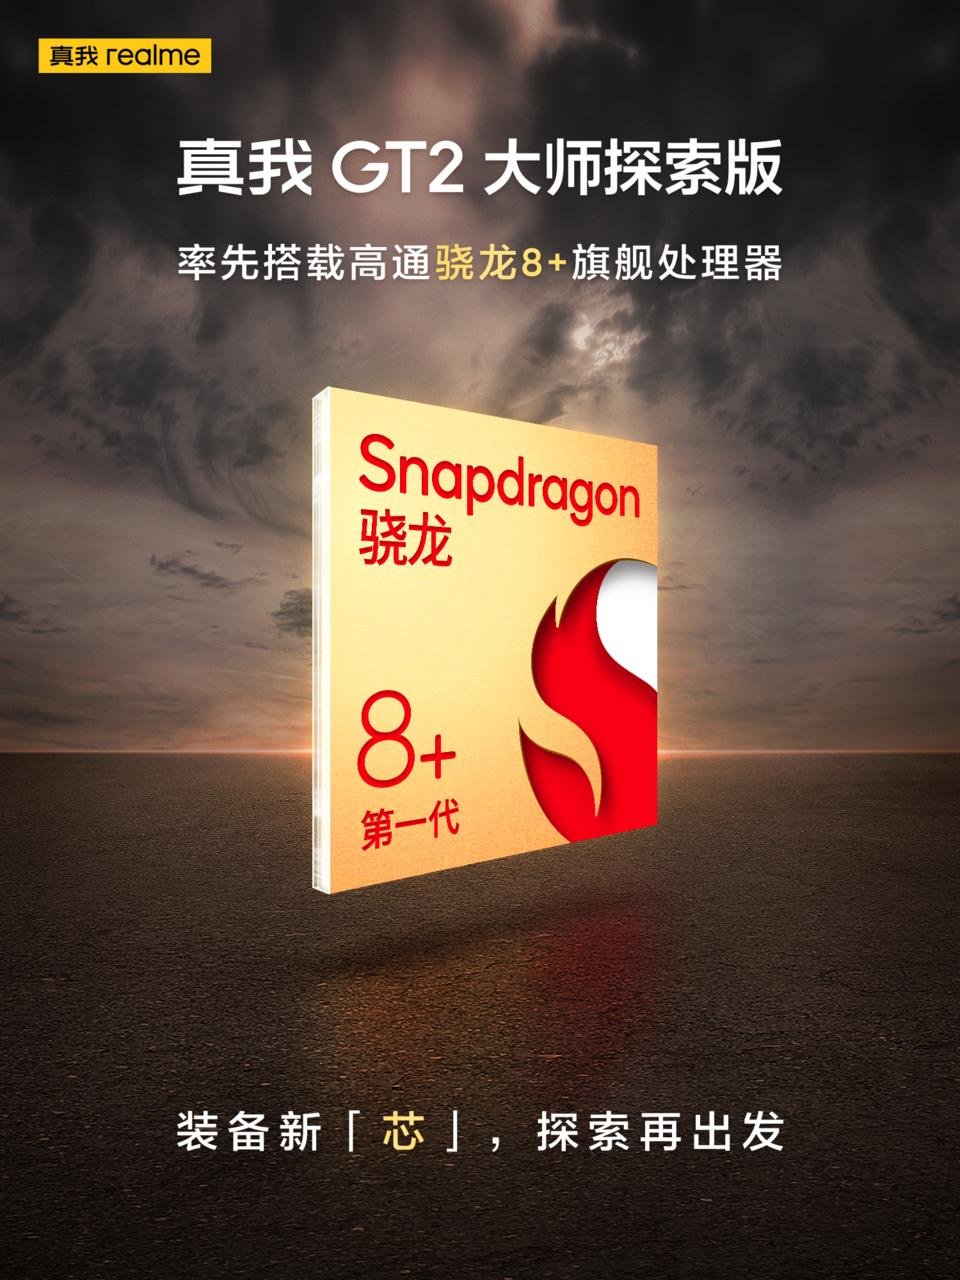 Realme GT2 Master Explorer Edition Snapdragon 8 Gen 1 Plus a